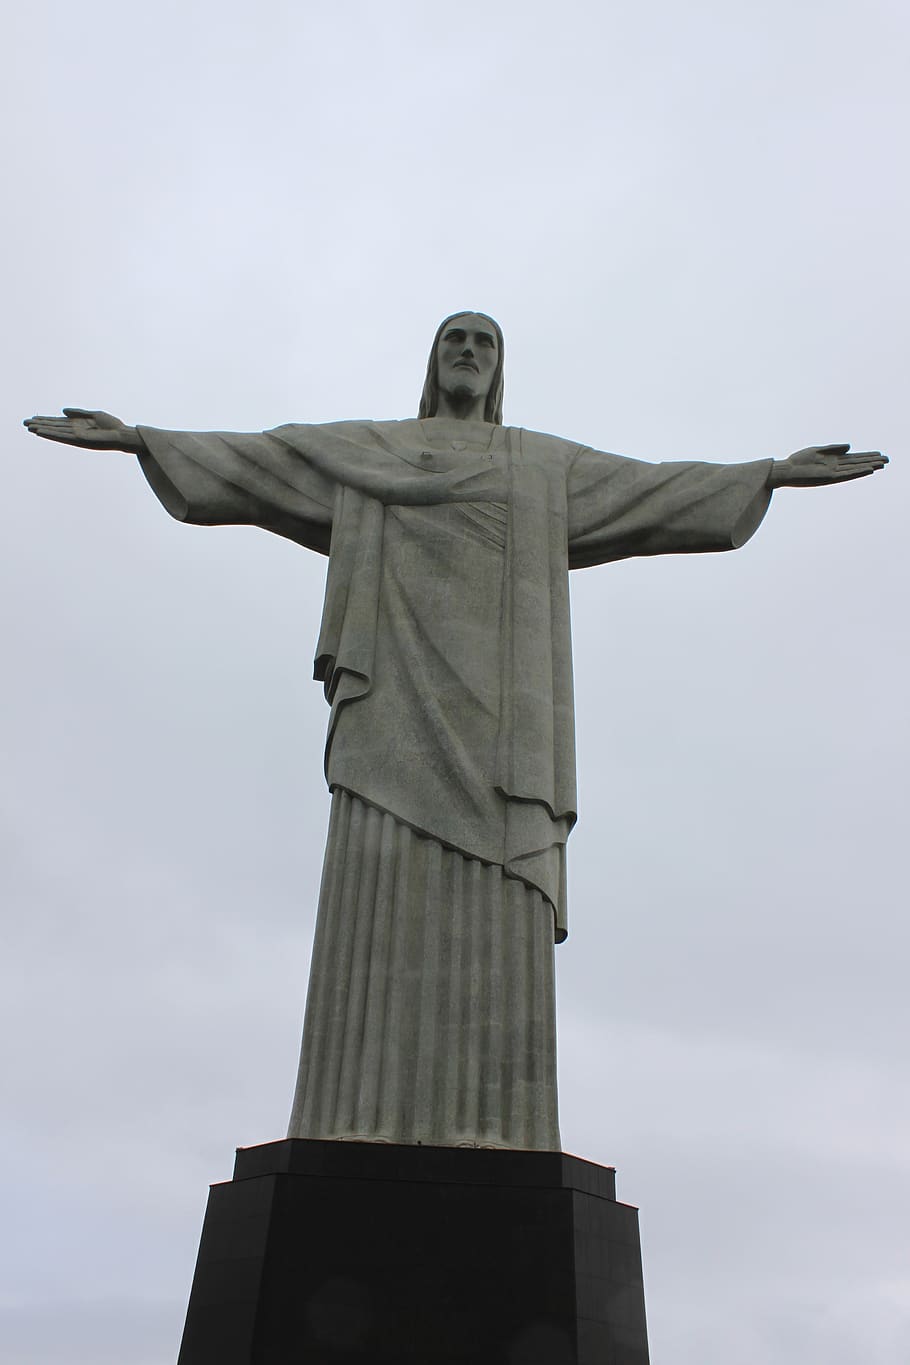 christ the redeemer statue, brazil, corcovado, paul landowski, the national park of tijuca, statue, imposing, world famous, architecture, sculpture